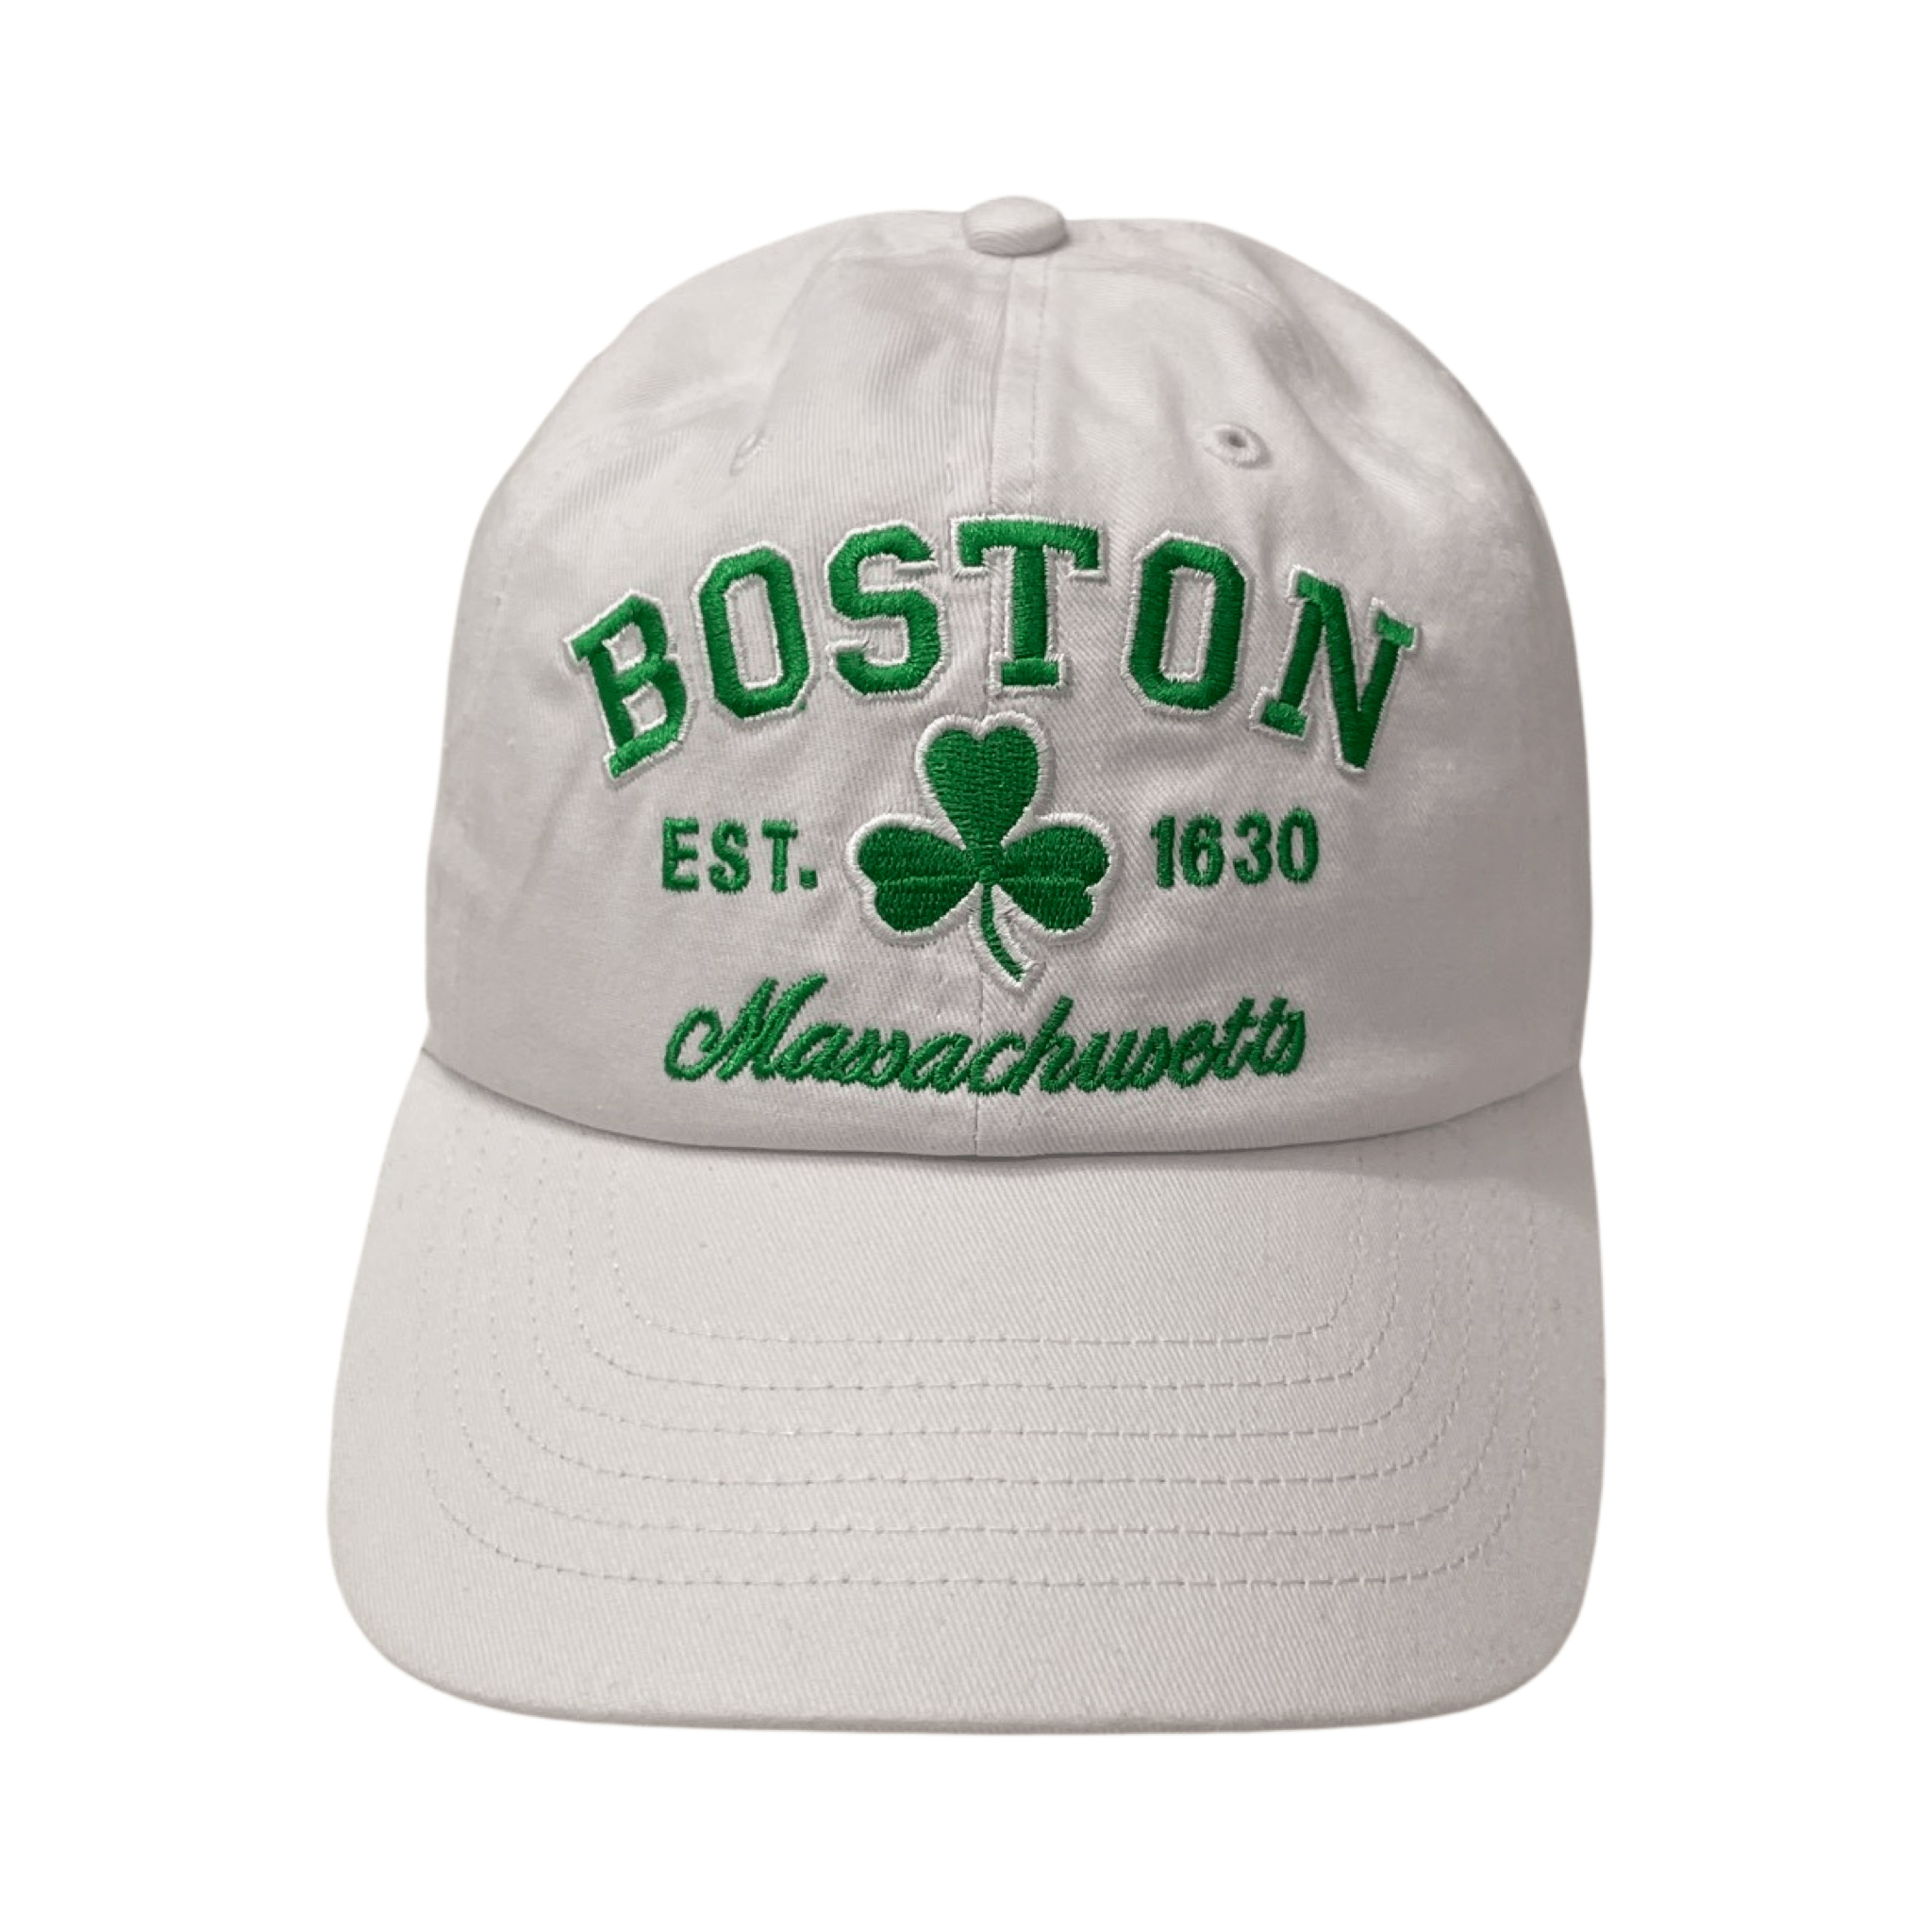 Boston Shamrock Embroidered Adjustable Hat, white